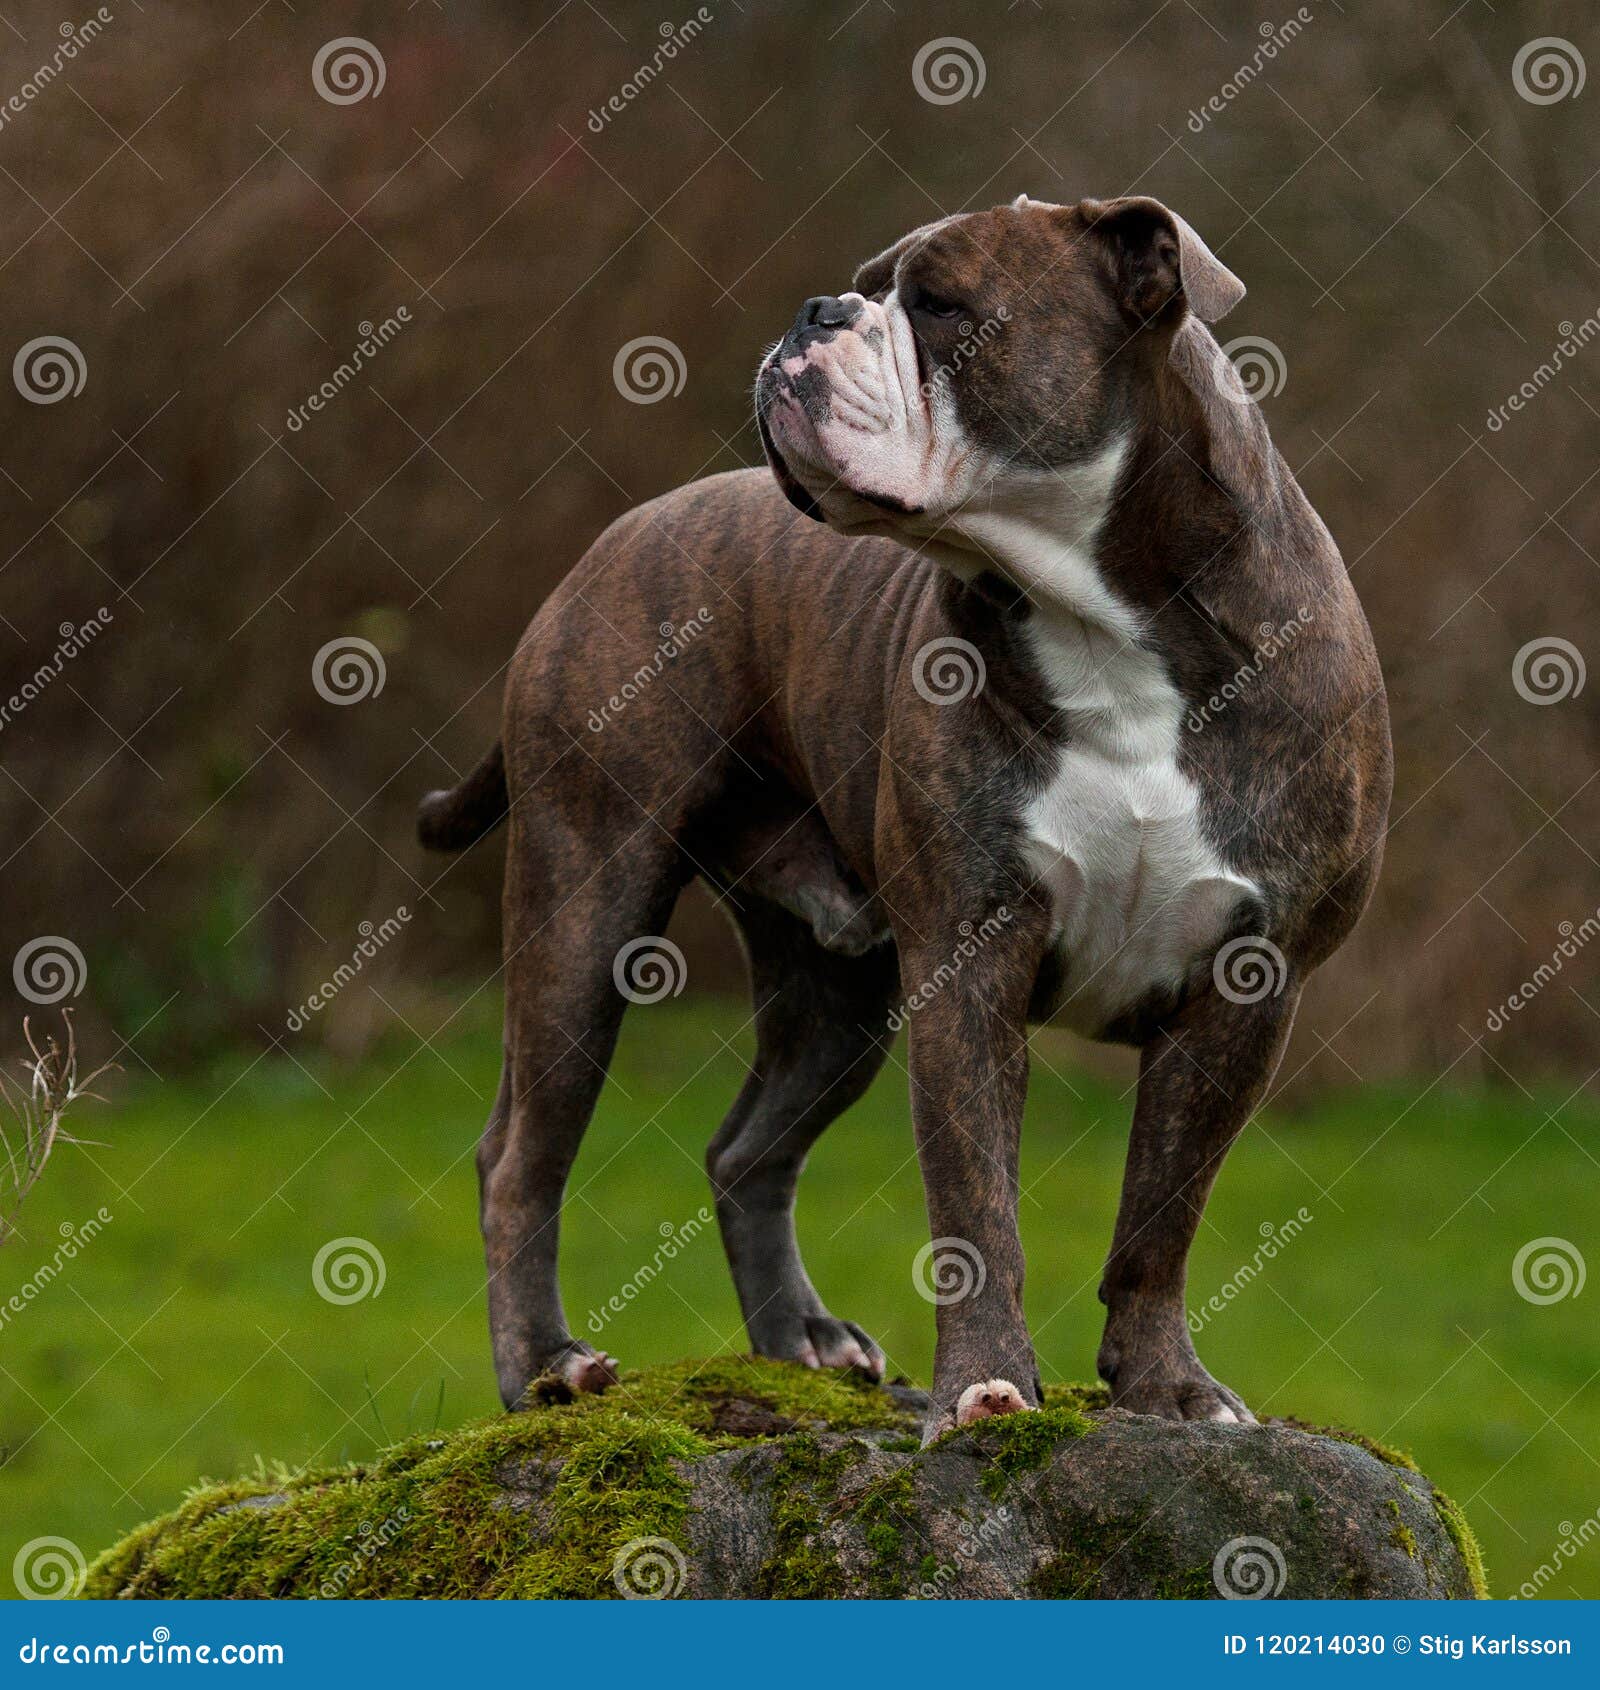 a powerful bulldog standing guarding